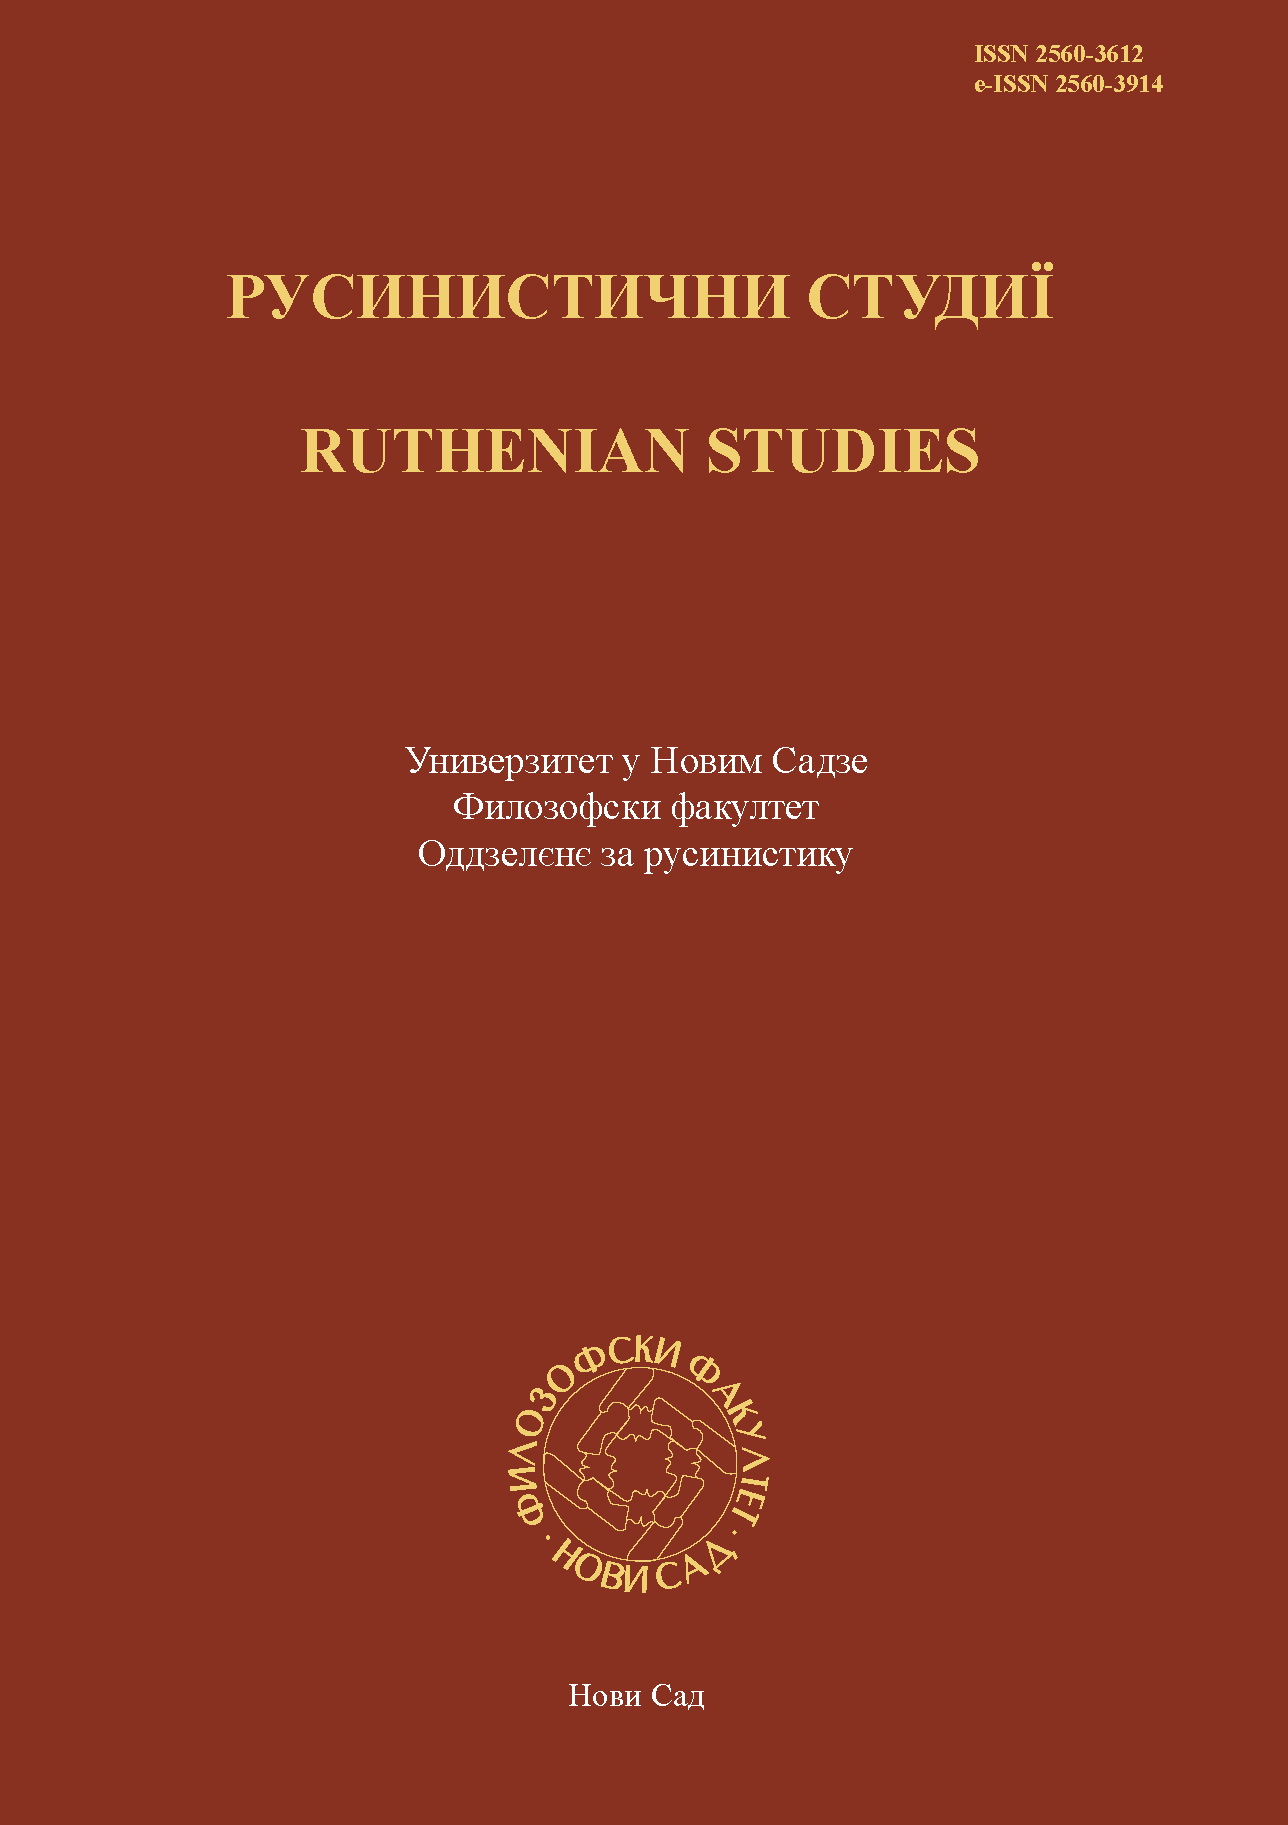 Ruthenian Studies